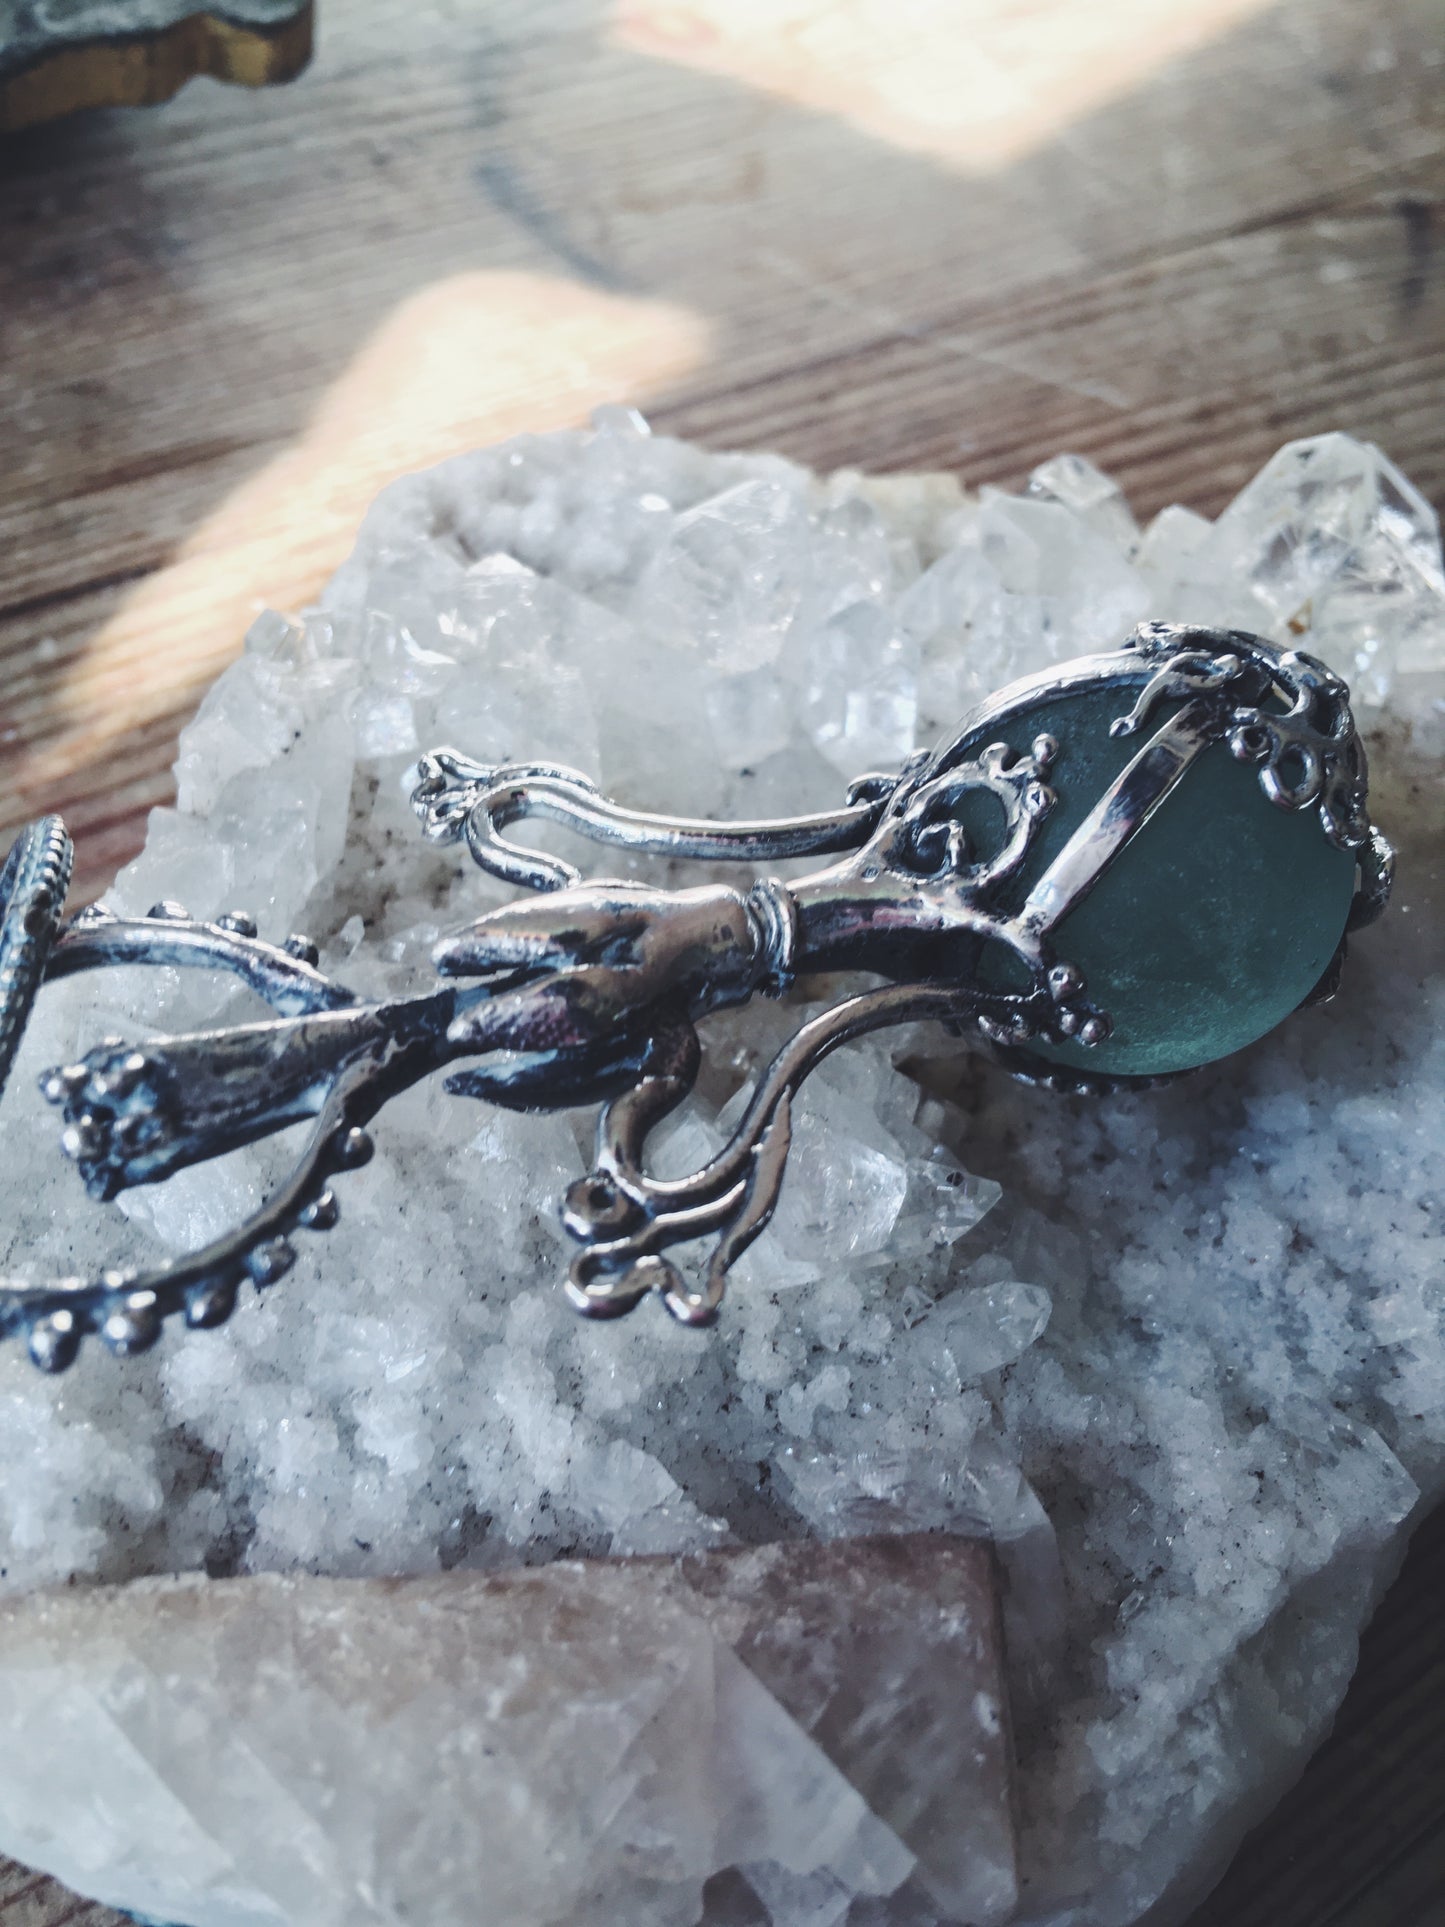 green elixir // magic potion silver pendant with antique glass